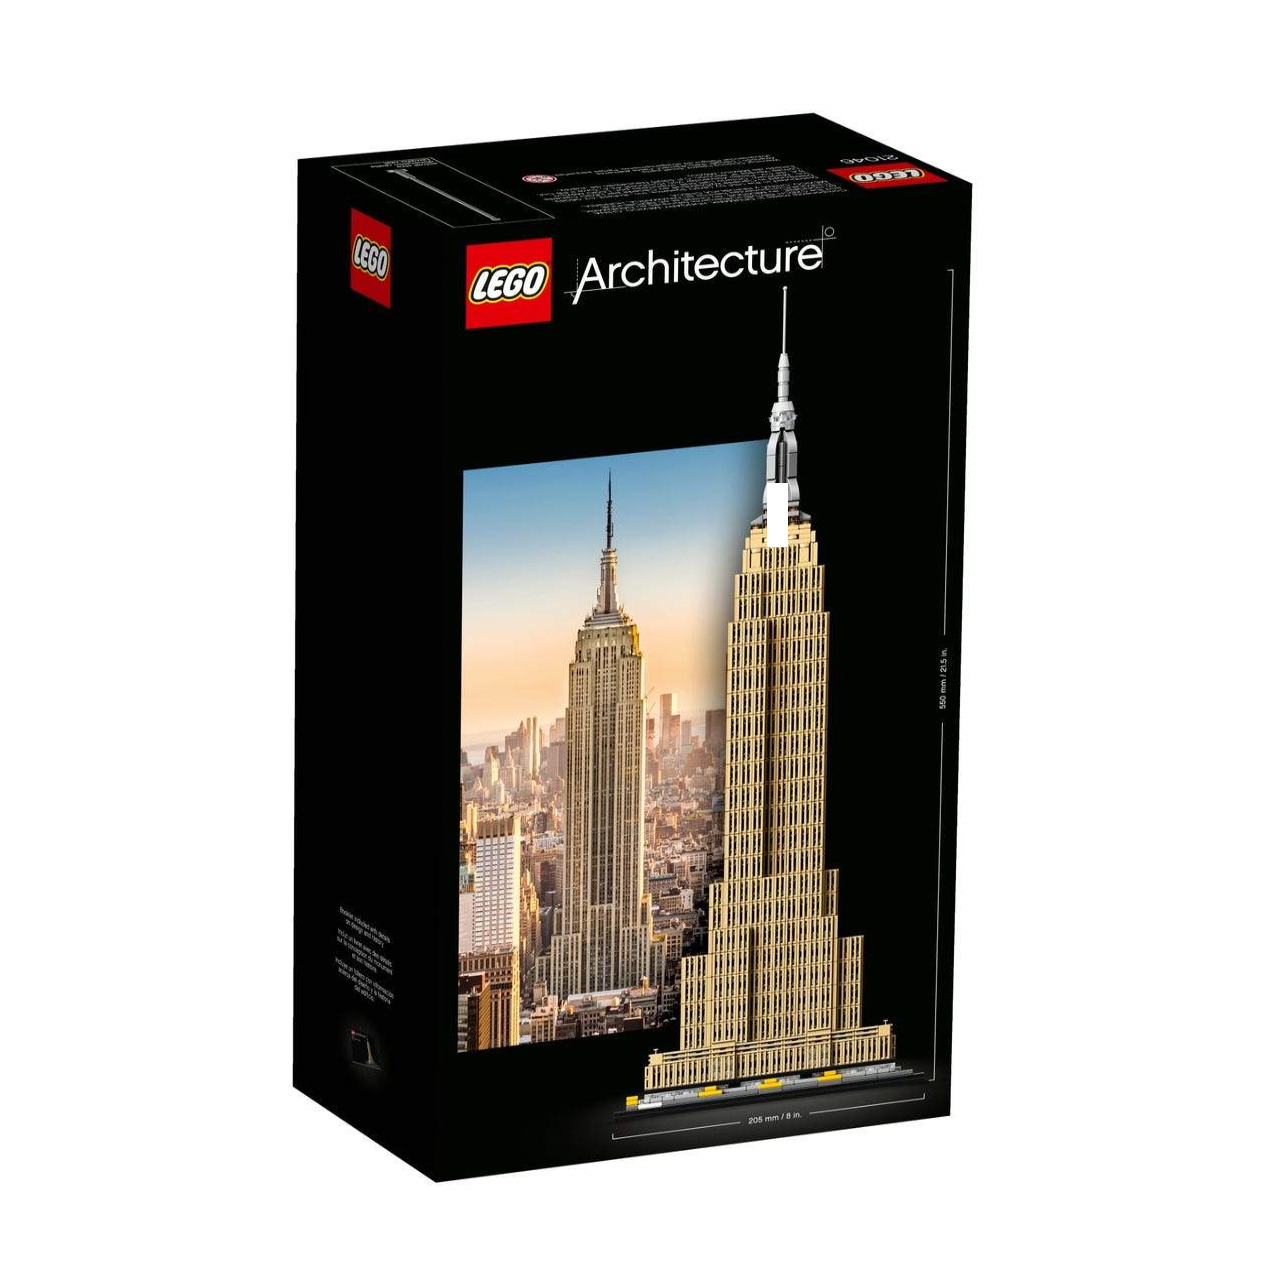 LEGO Architecture Empire State Building 21046